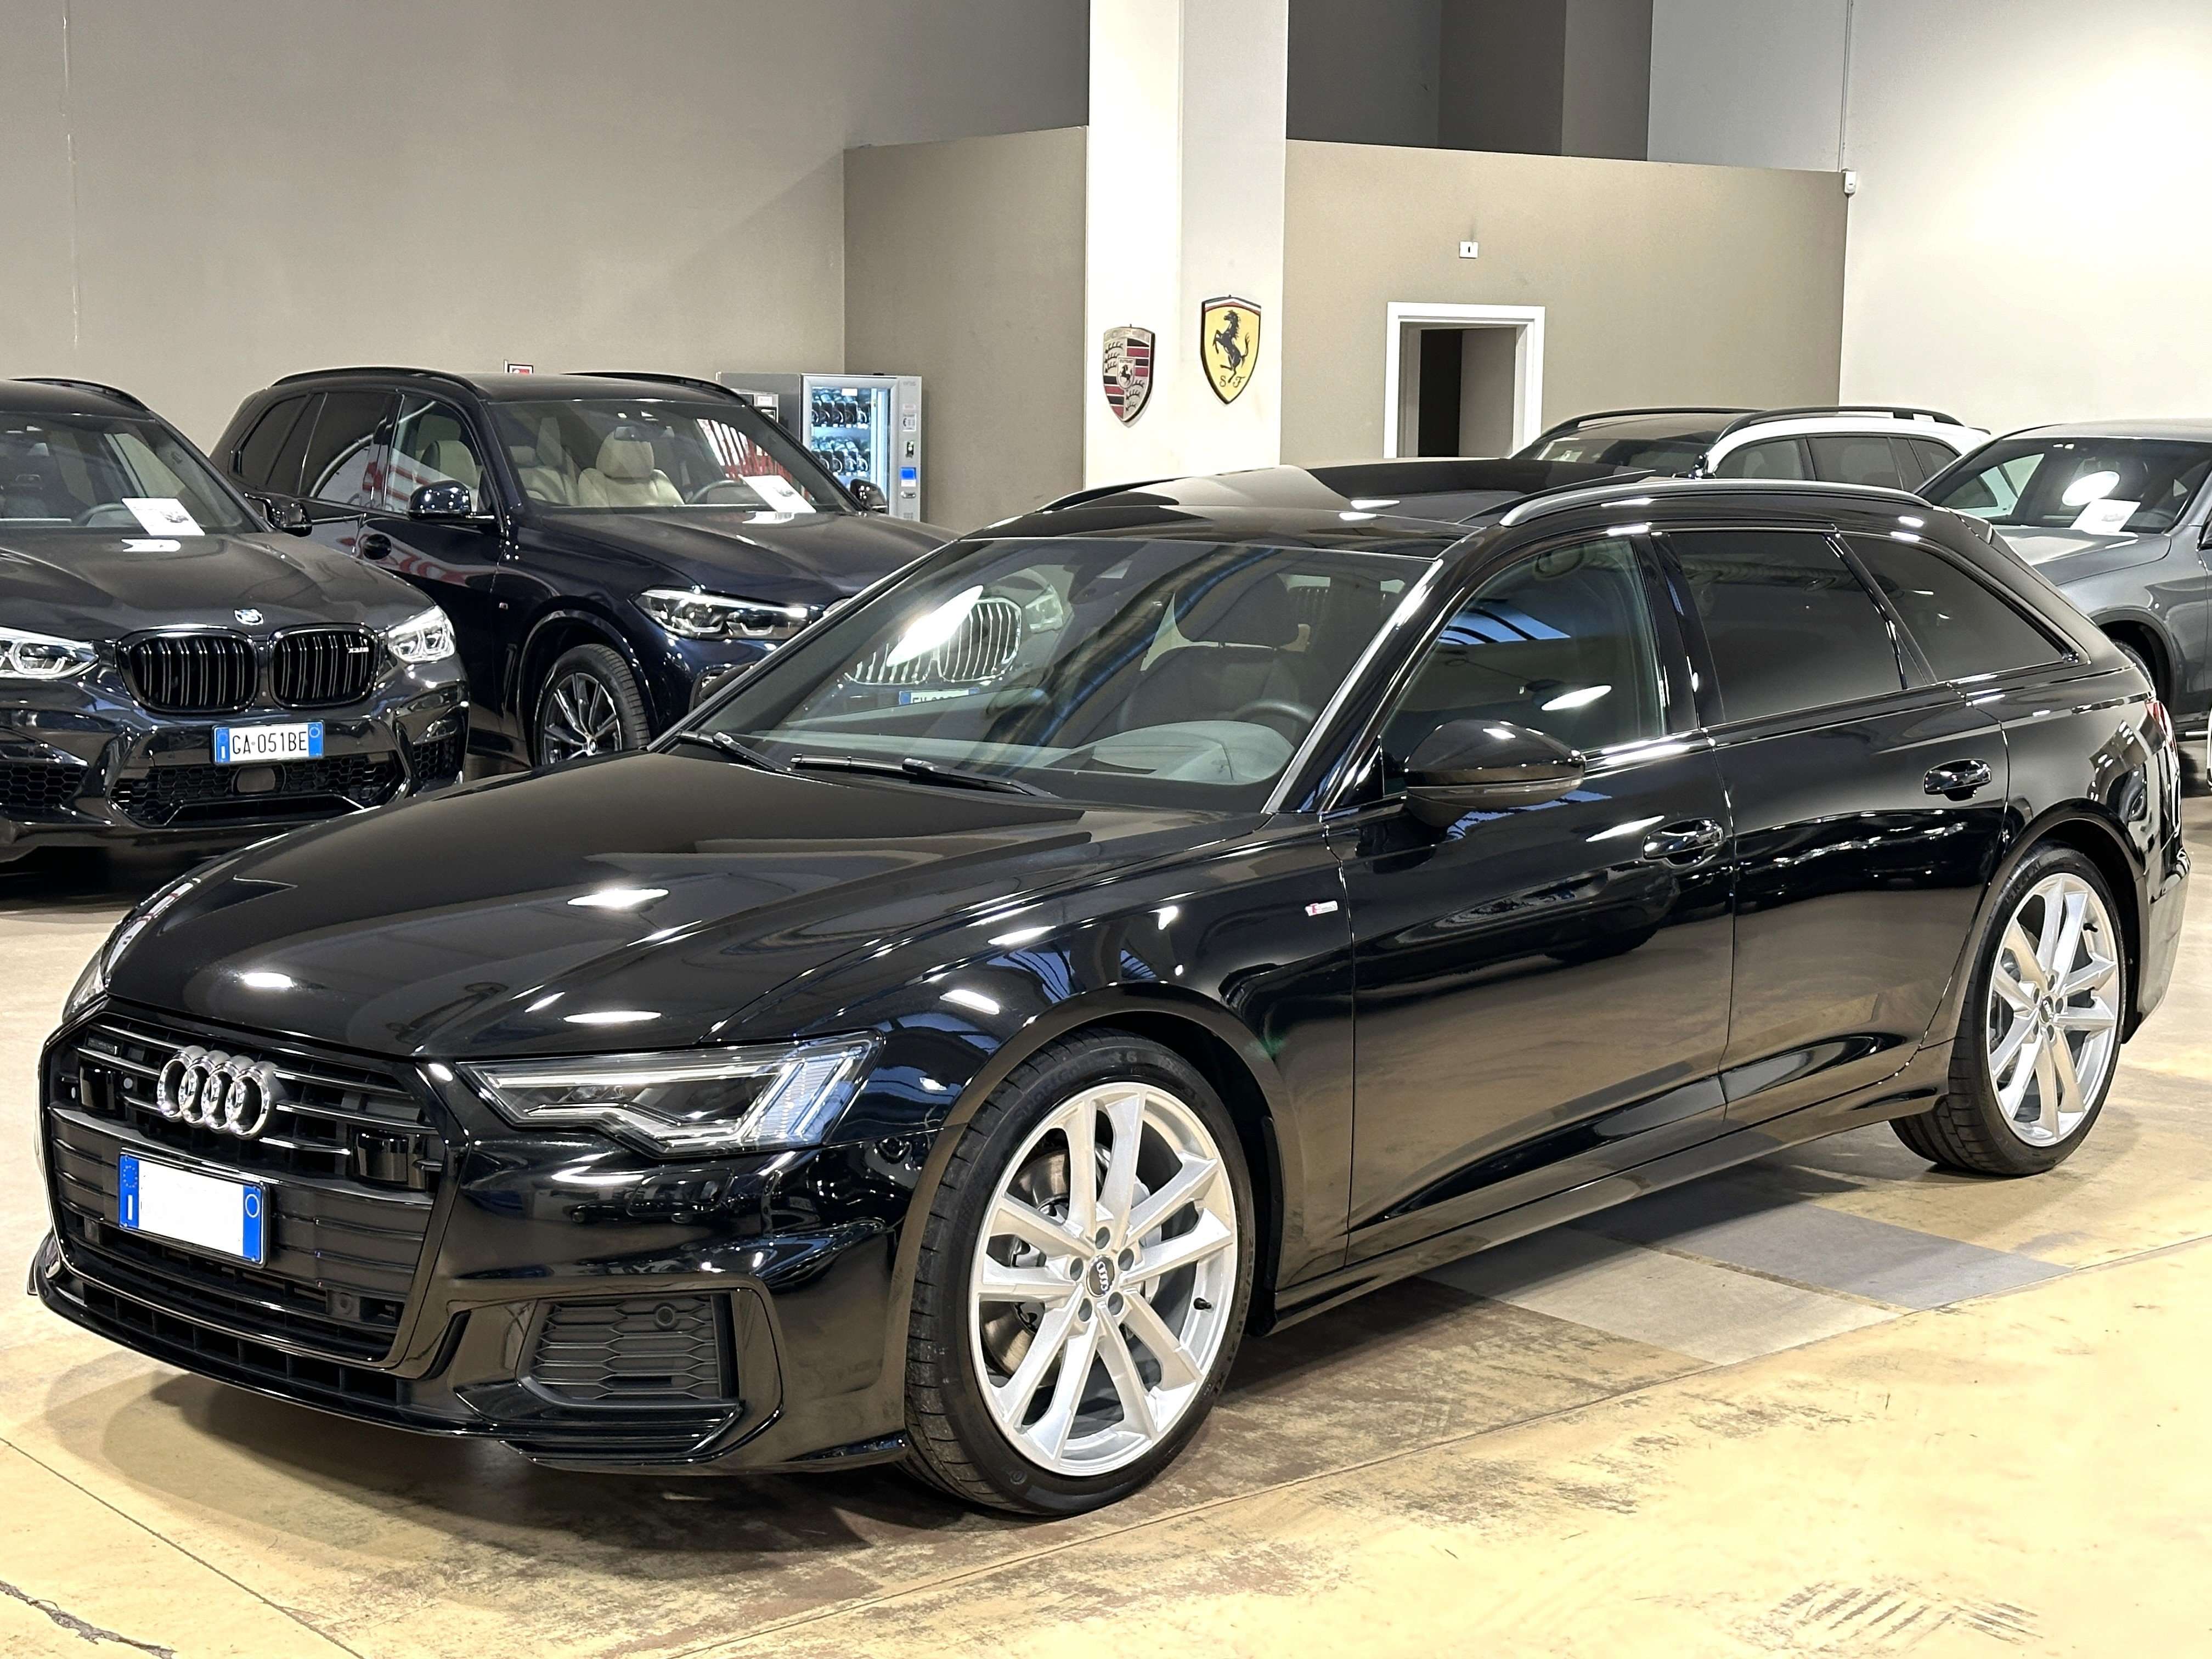 Audi A6 Station wagon in Black used in Paderno Dugnano – Milano – Mi for € 52,900.-